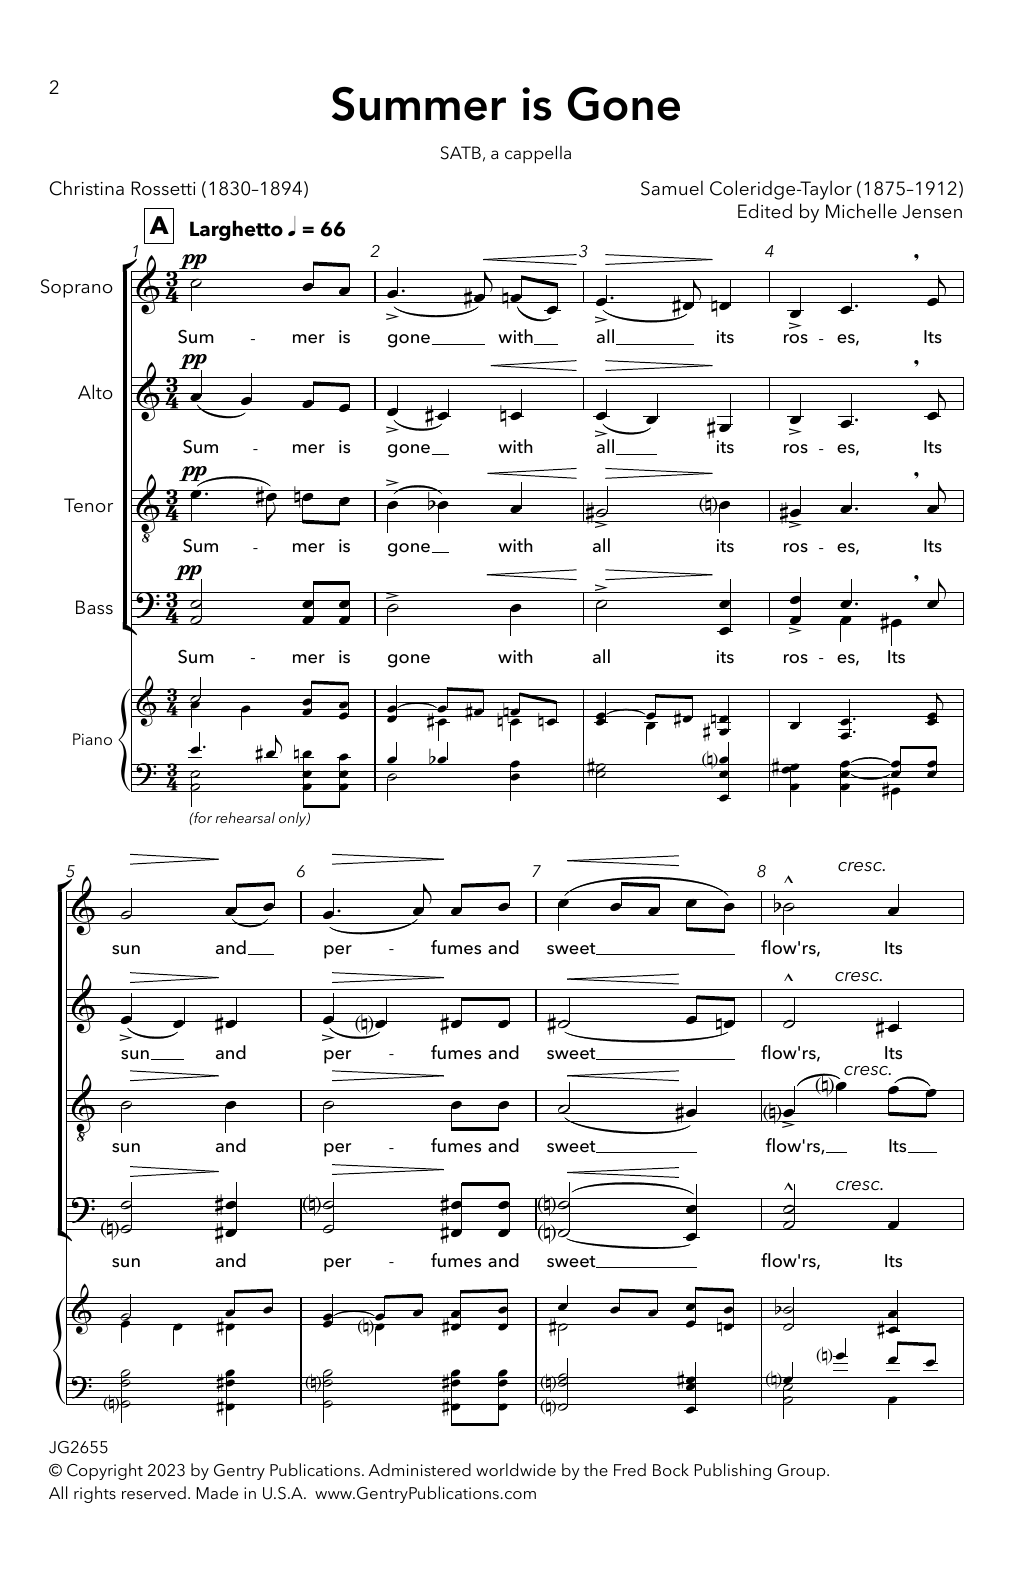 Samuel Coleridge-Taylor Summer Is Gone Sheet Music Notes & Chords for SATB Choir - Download or Print PDF